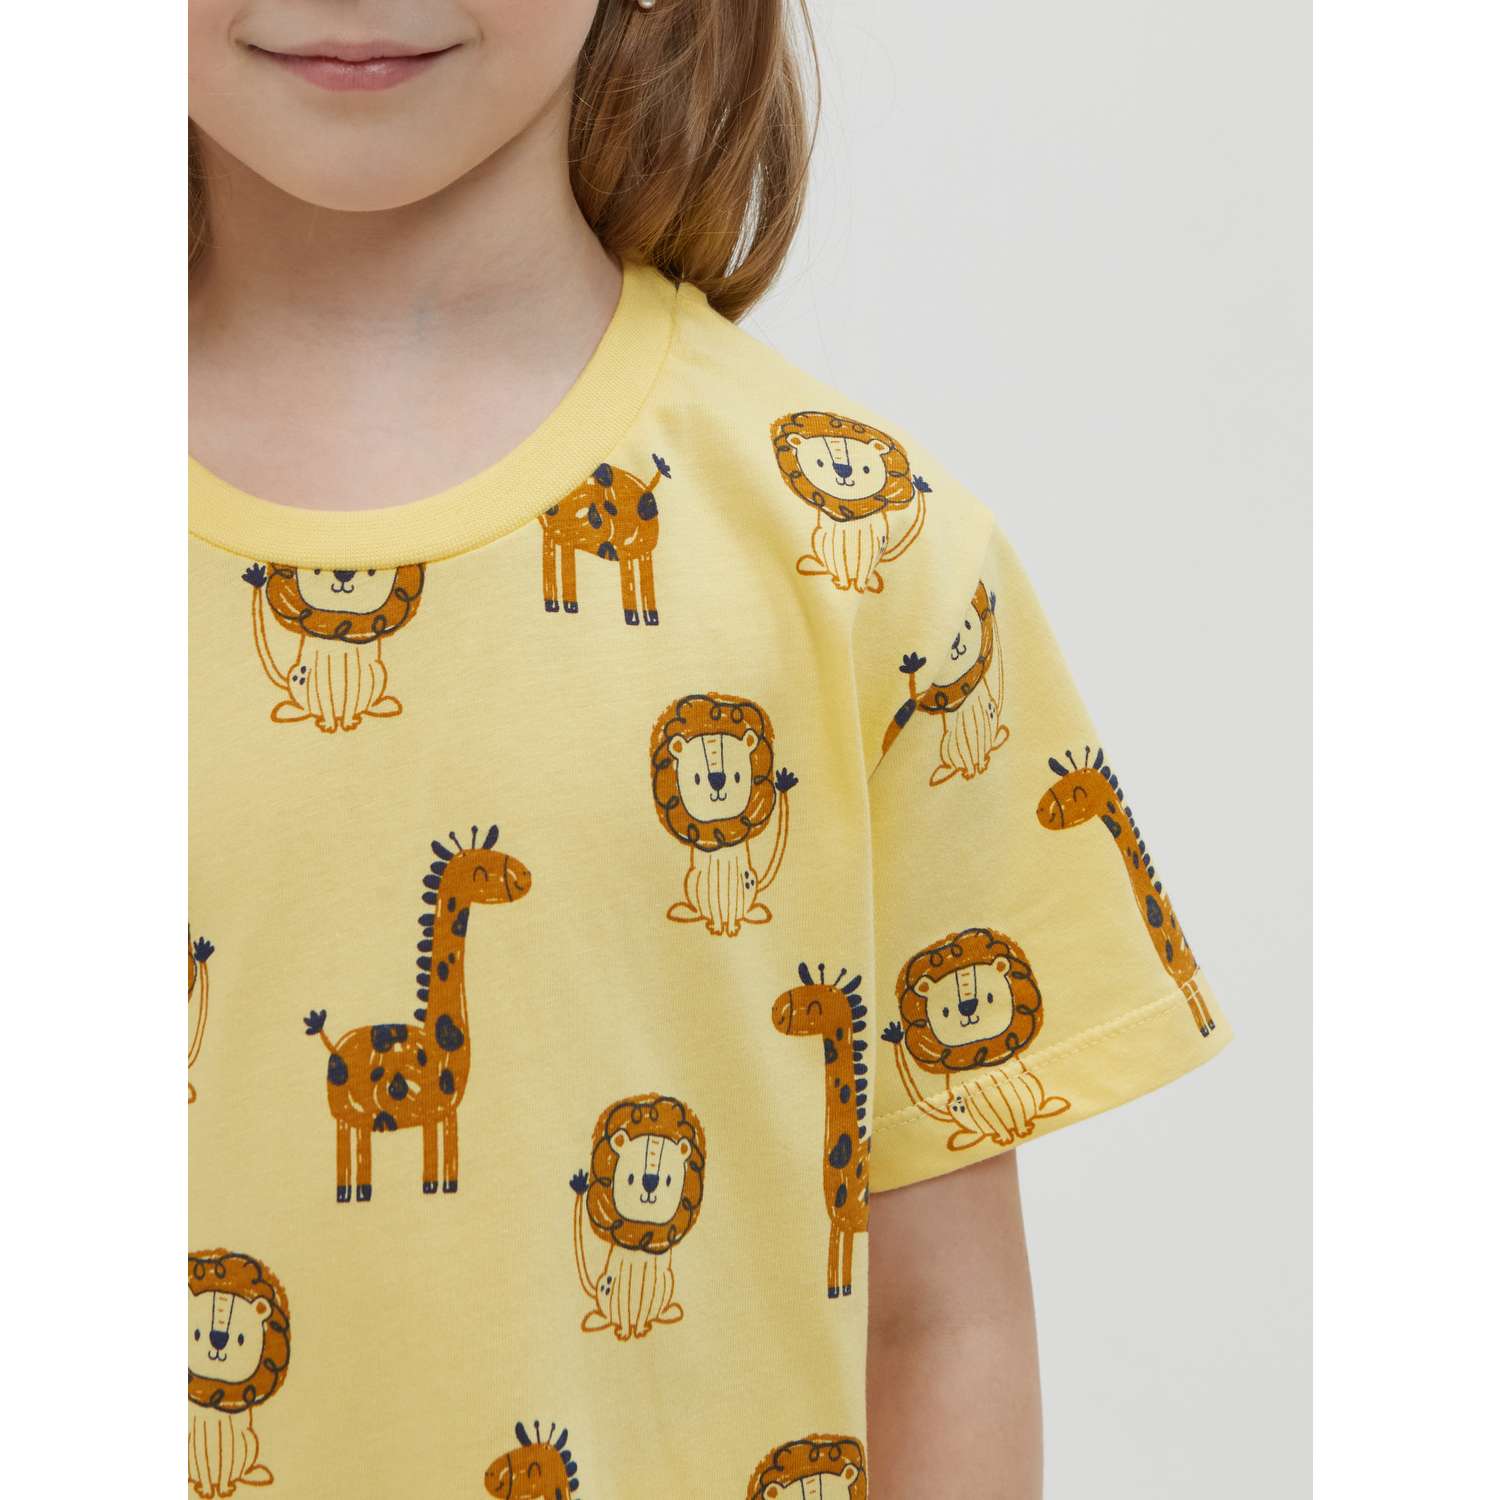 Пижама ISSHOP пижама желтая с шортами - фото 5